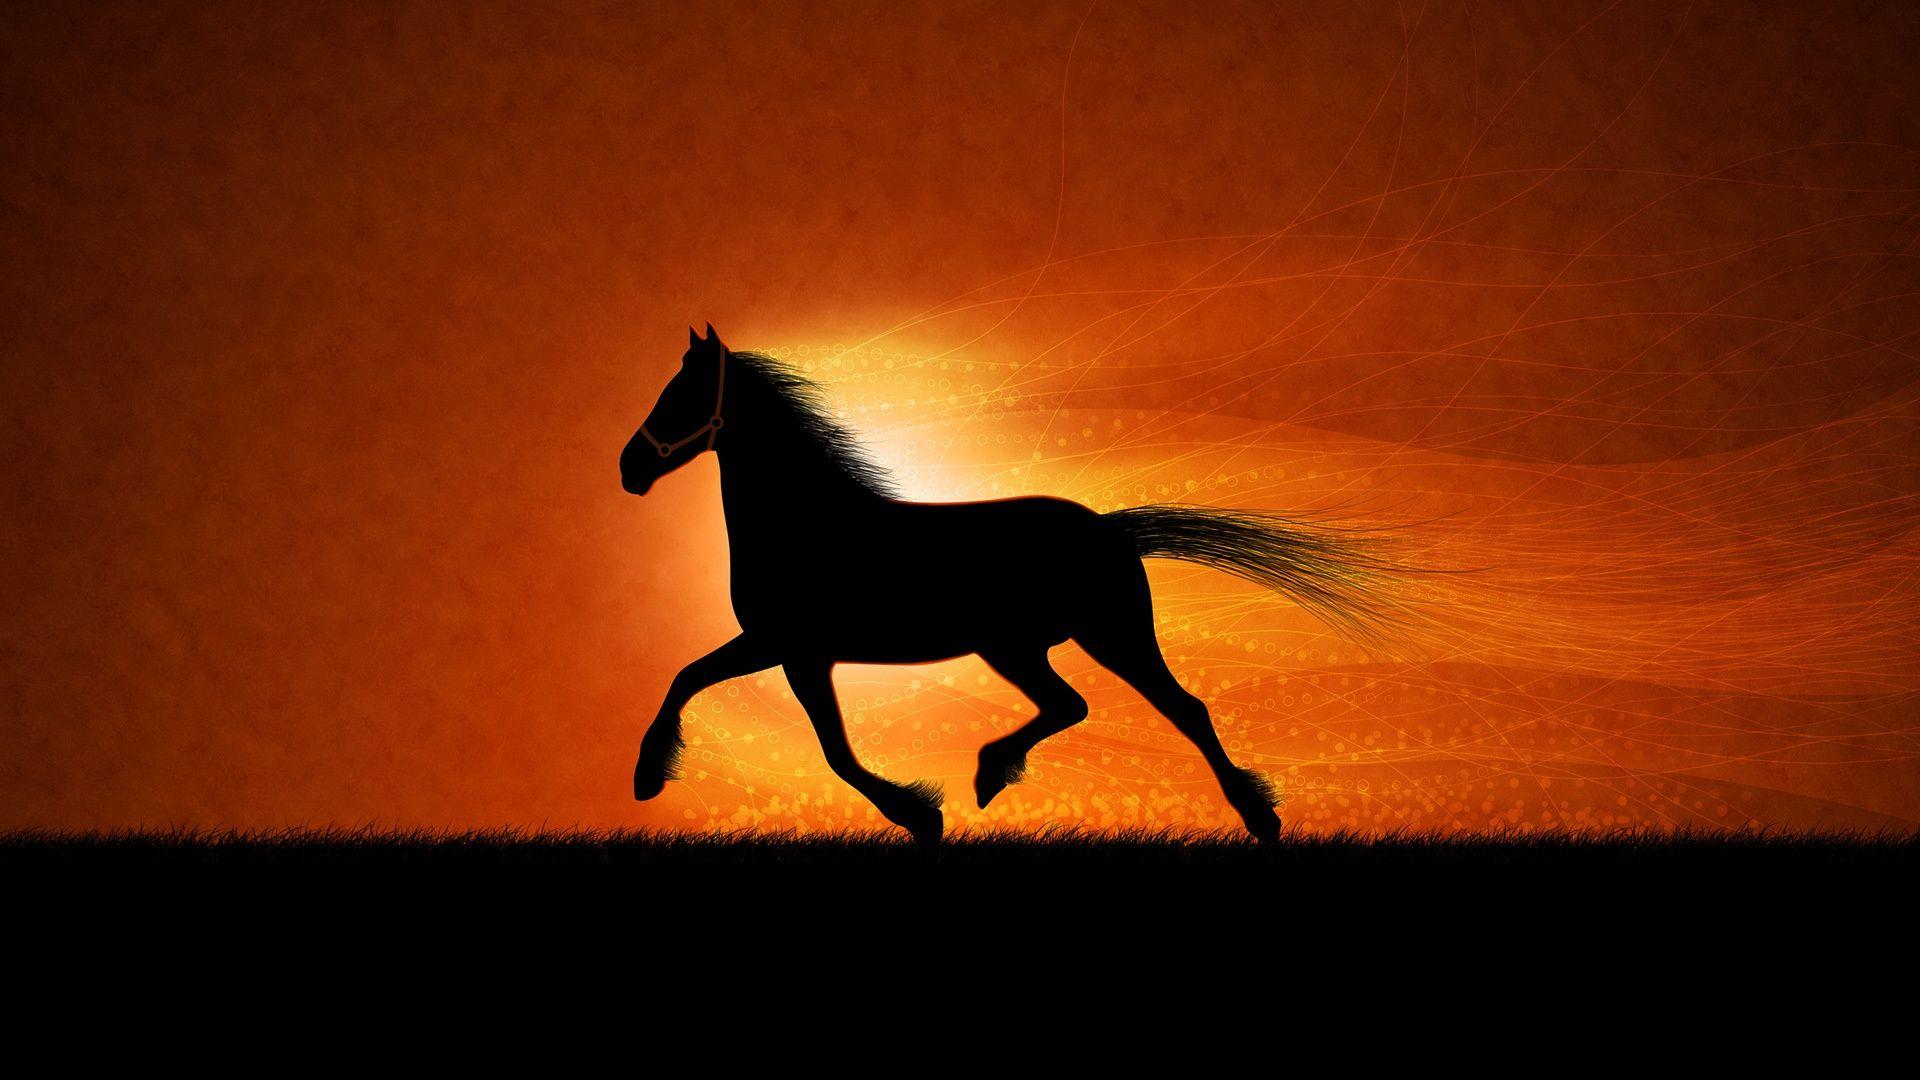 Running horse Wallpaper in jpg format for free download